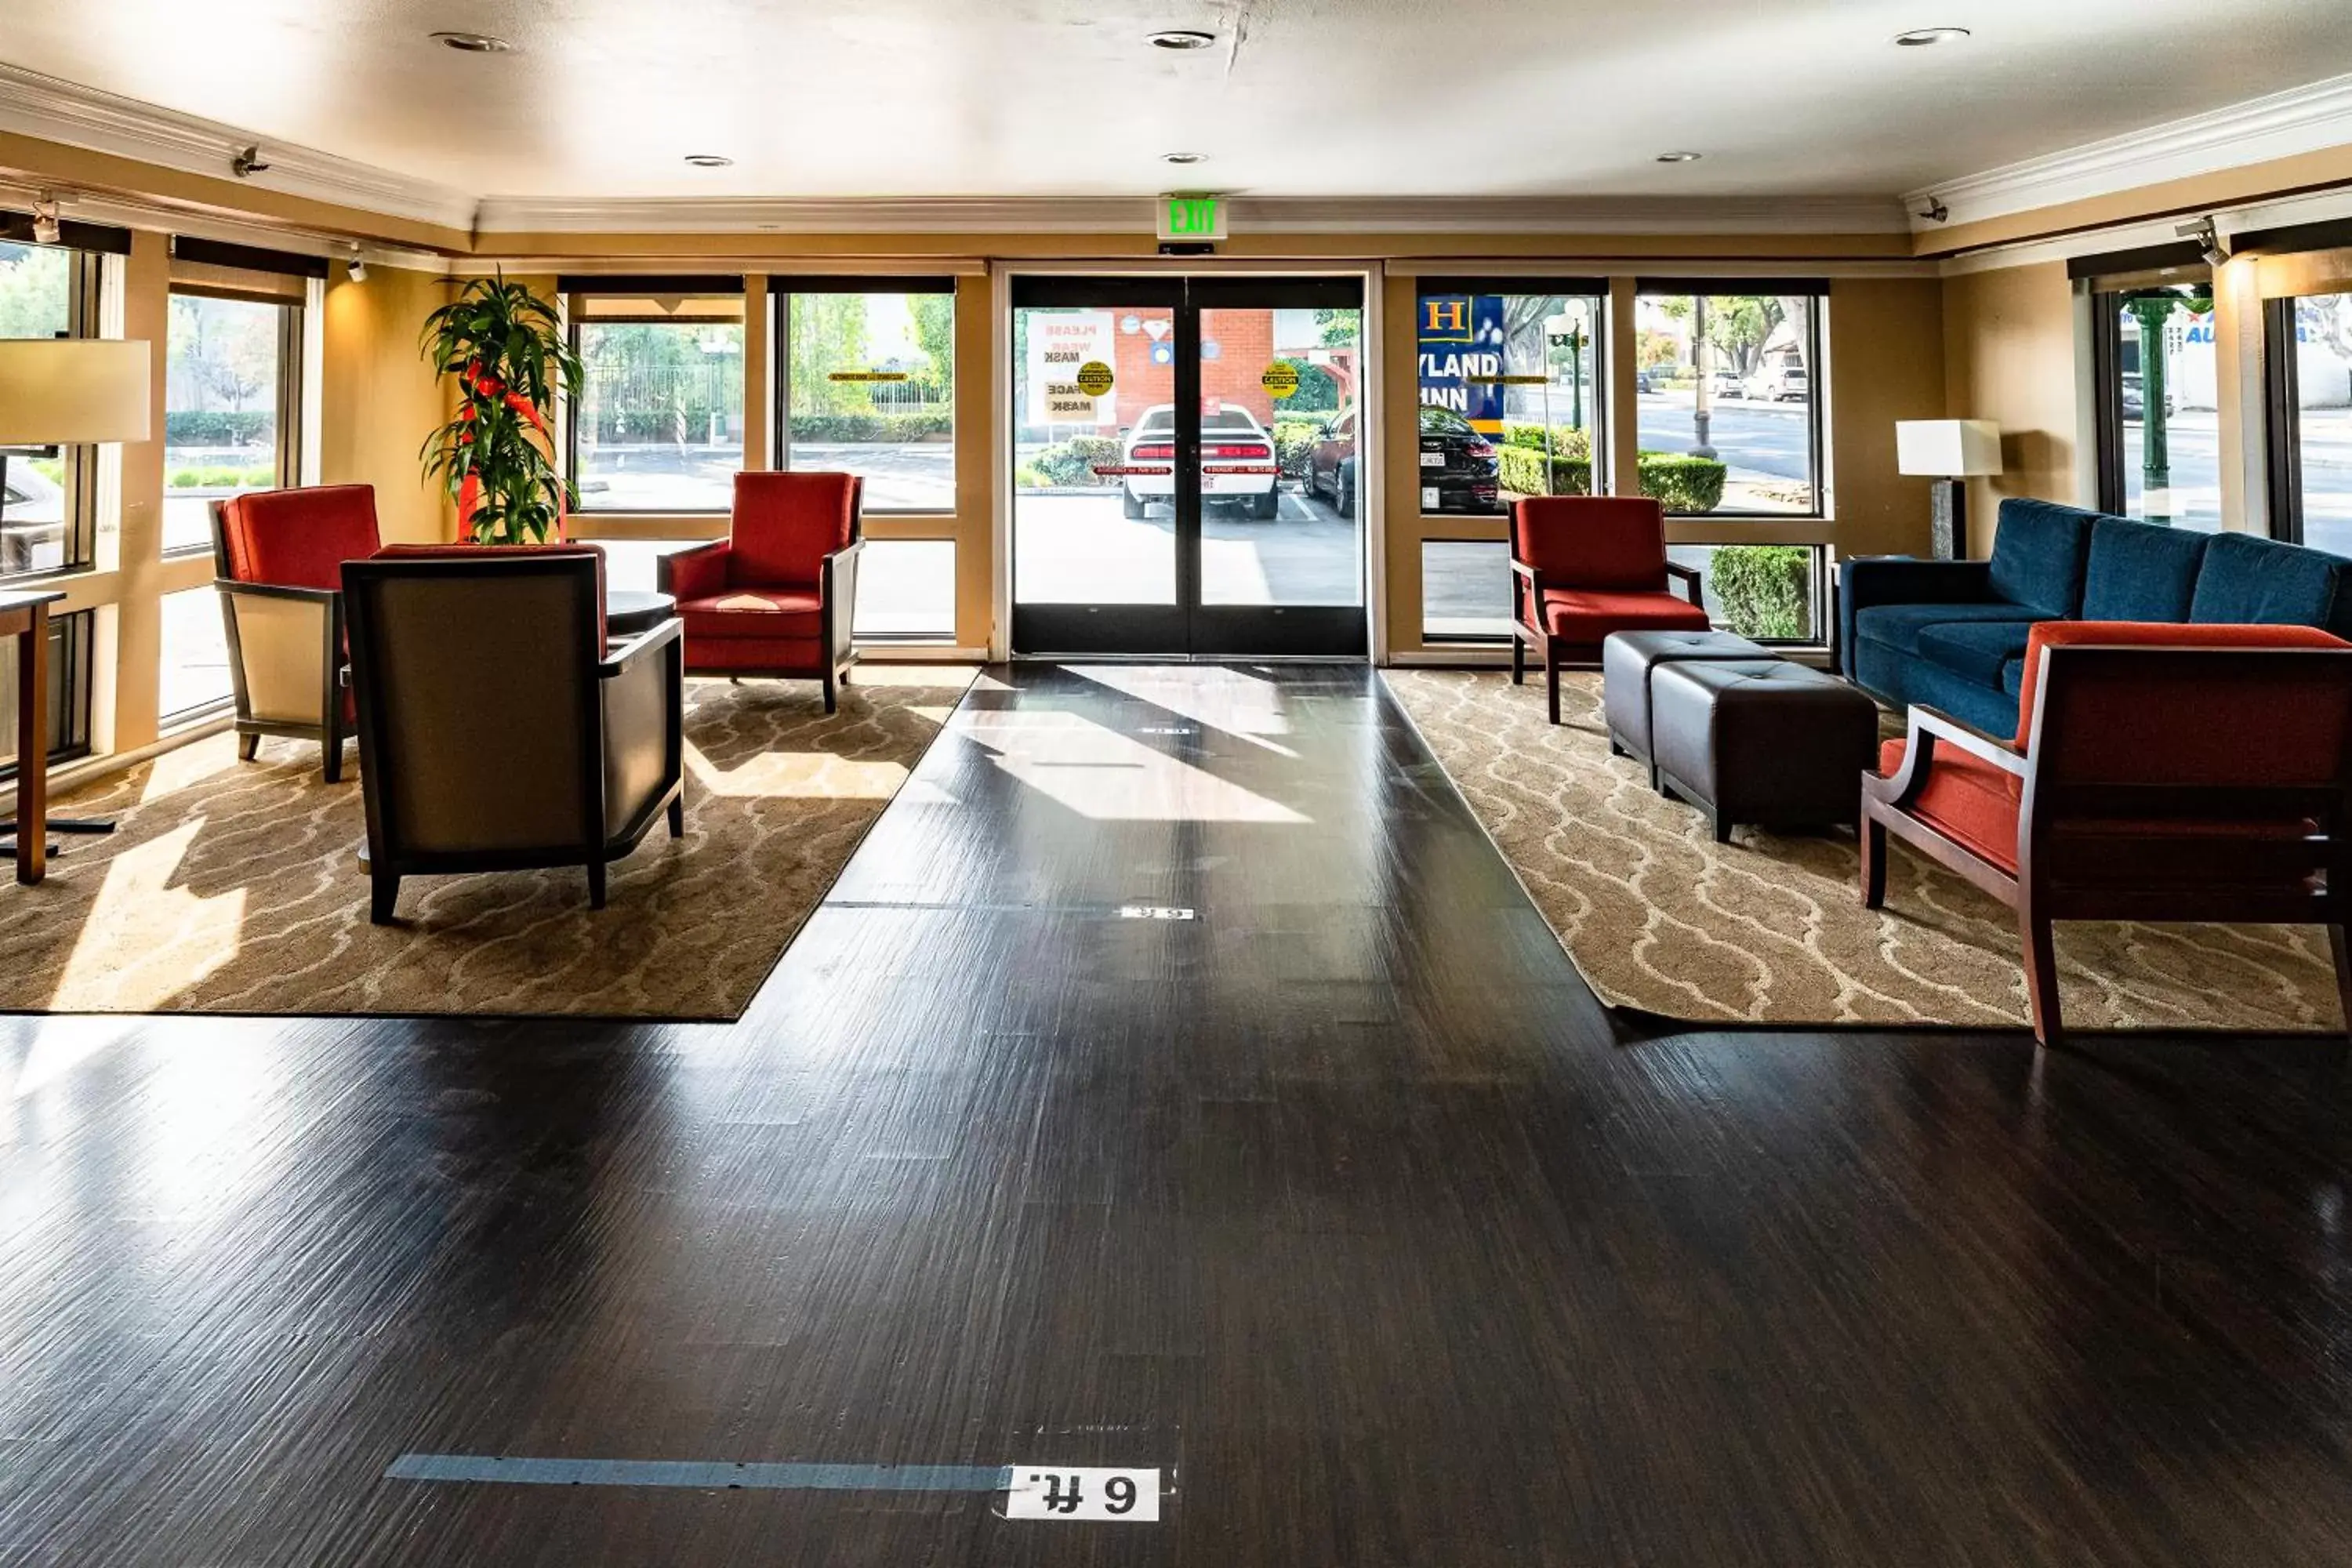 Lobby or reception, Lobby/Reception in Hyland Inn near Pasadena Civic Center